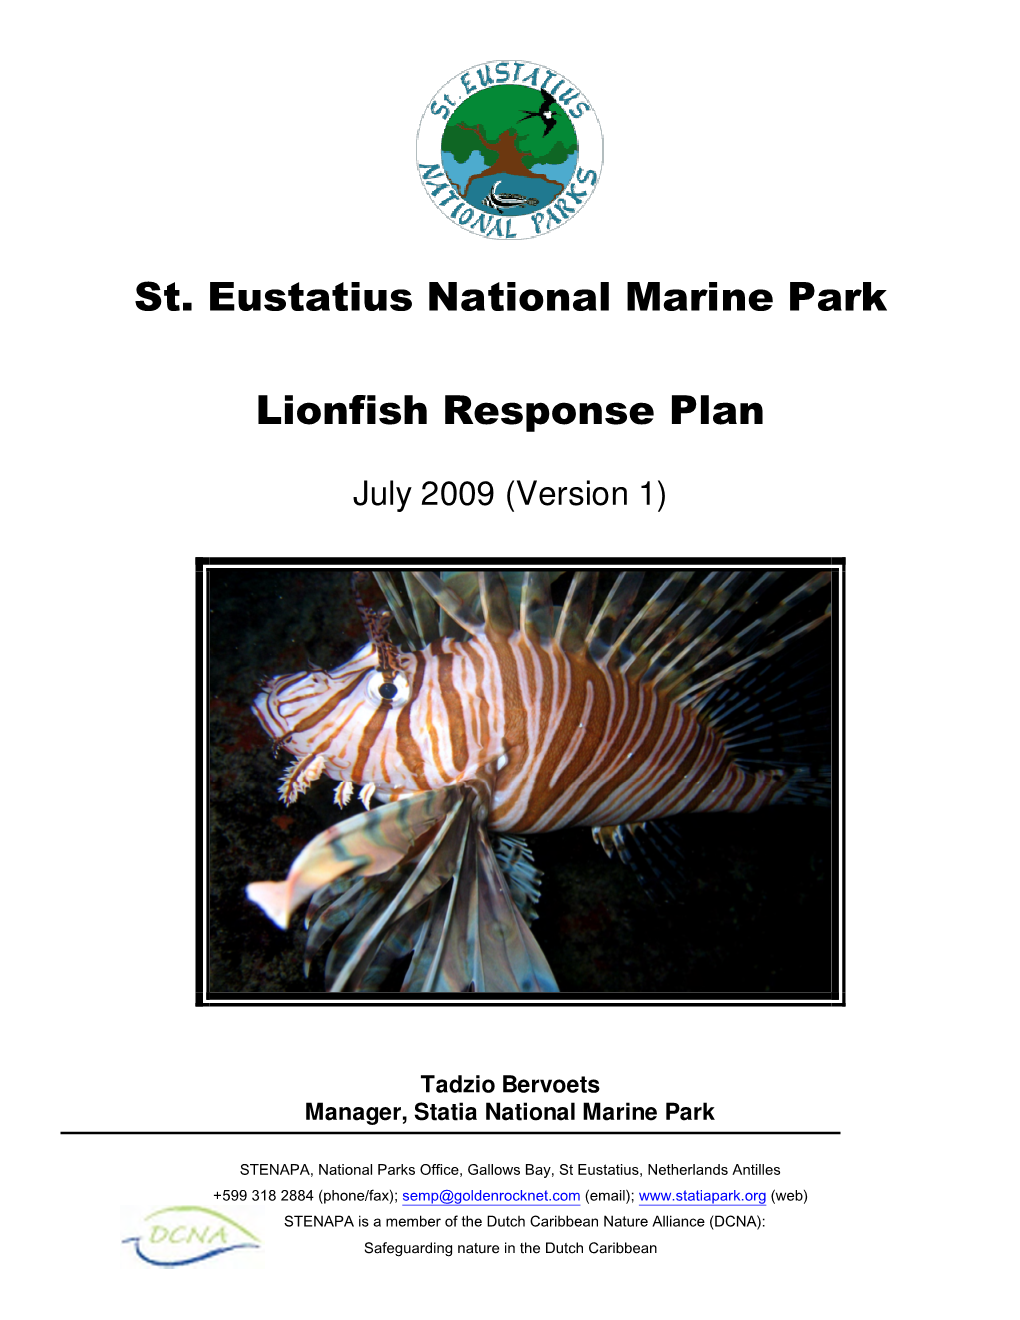 St. Eustatius National Marine Park Lionfish Response Plan